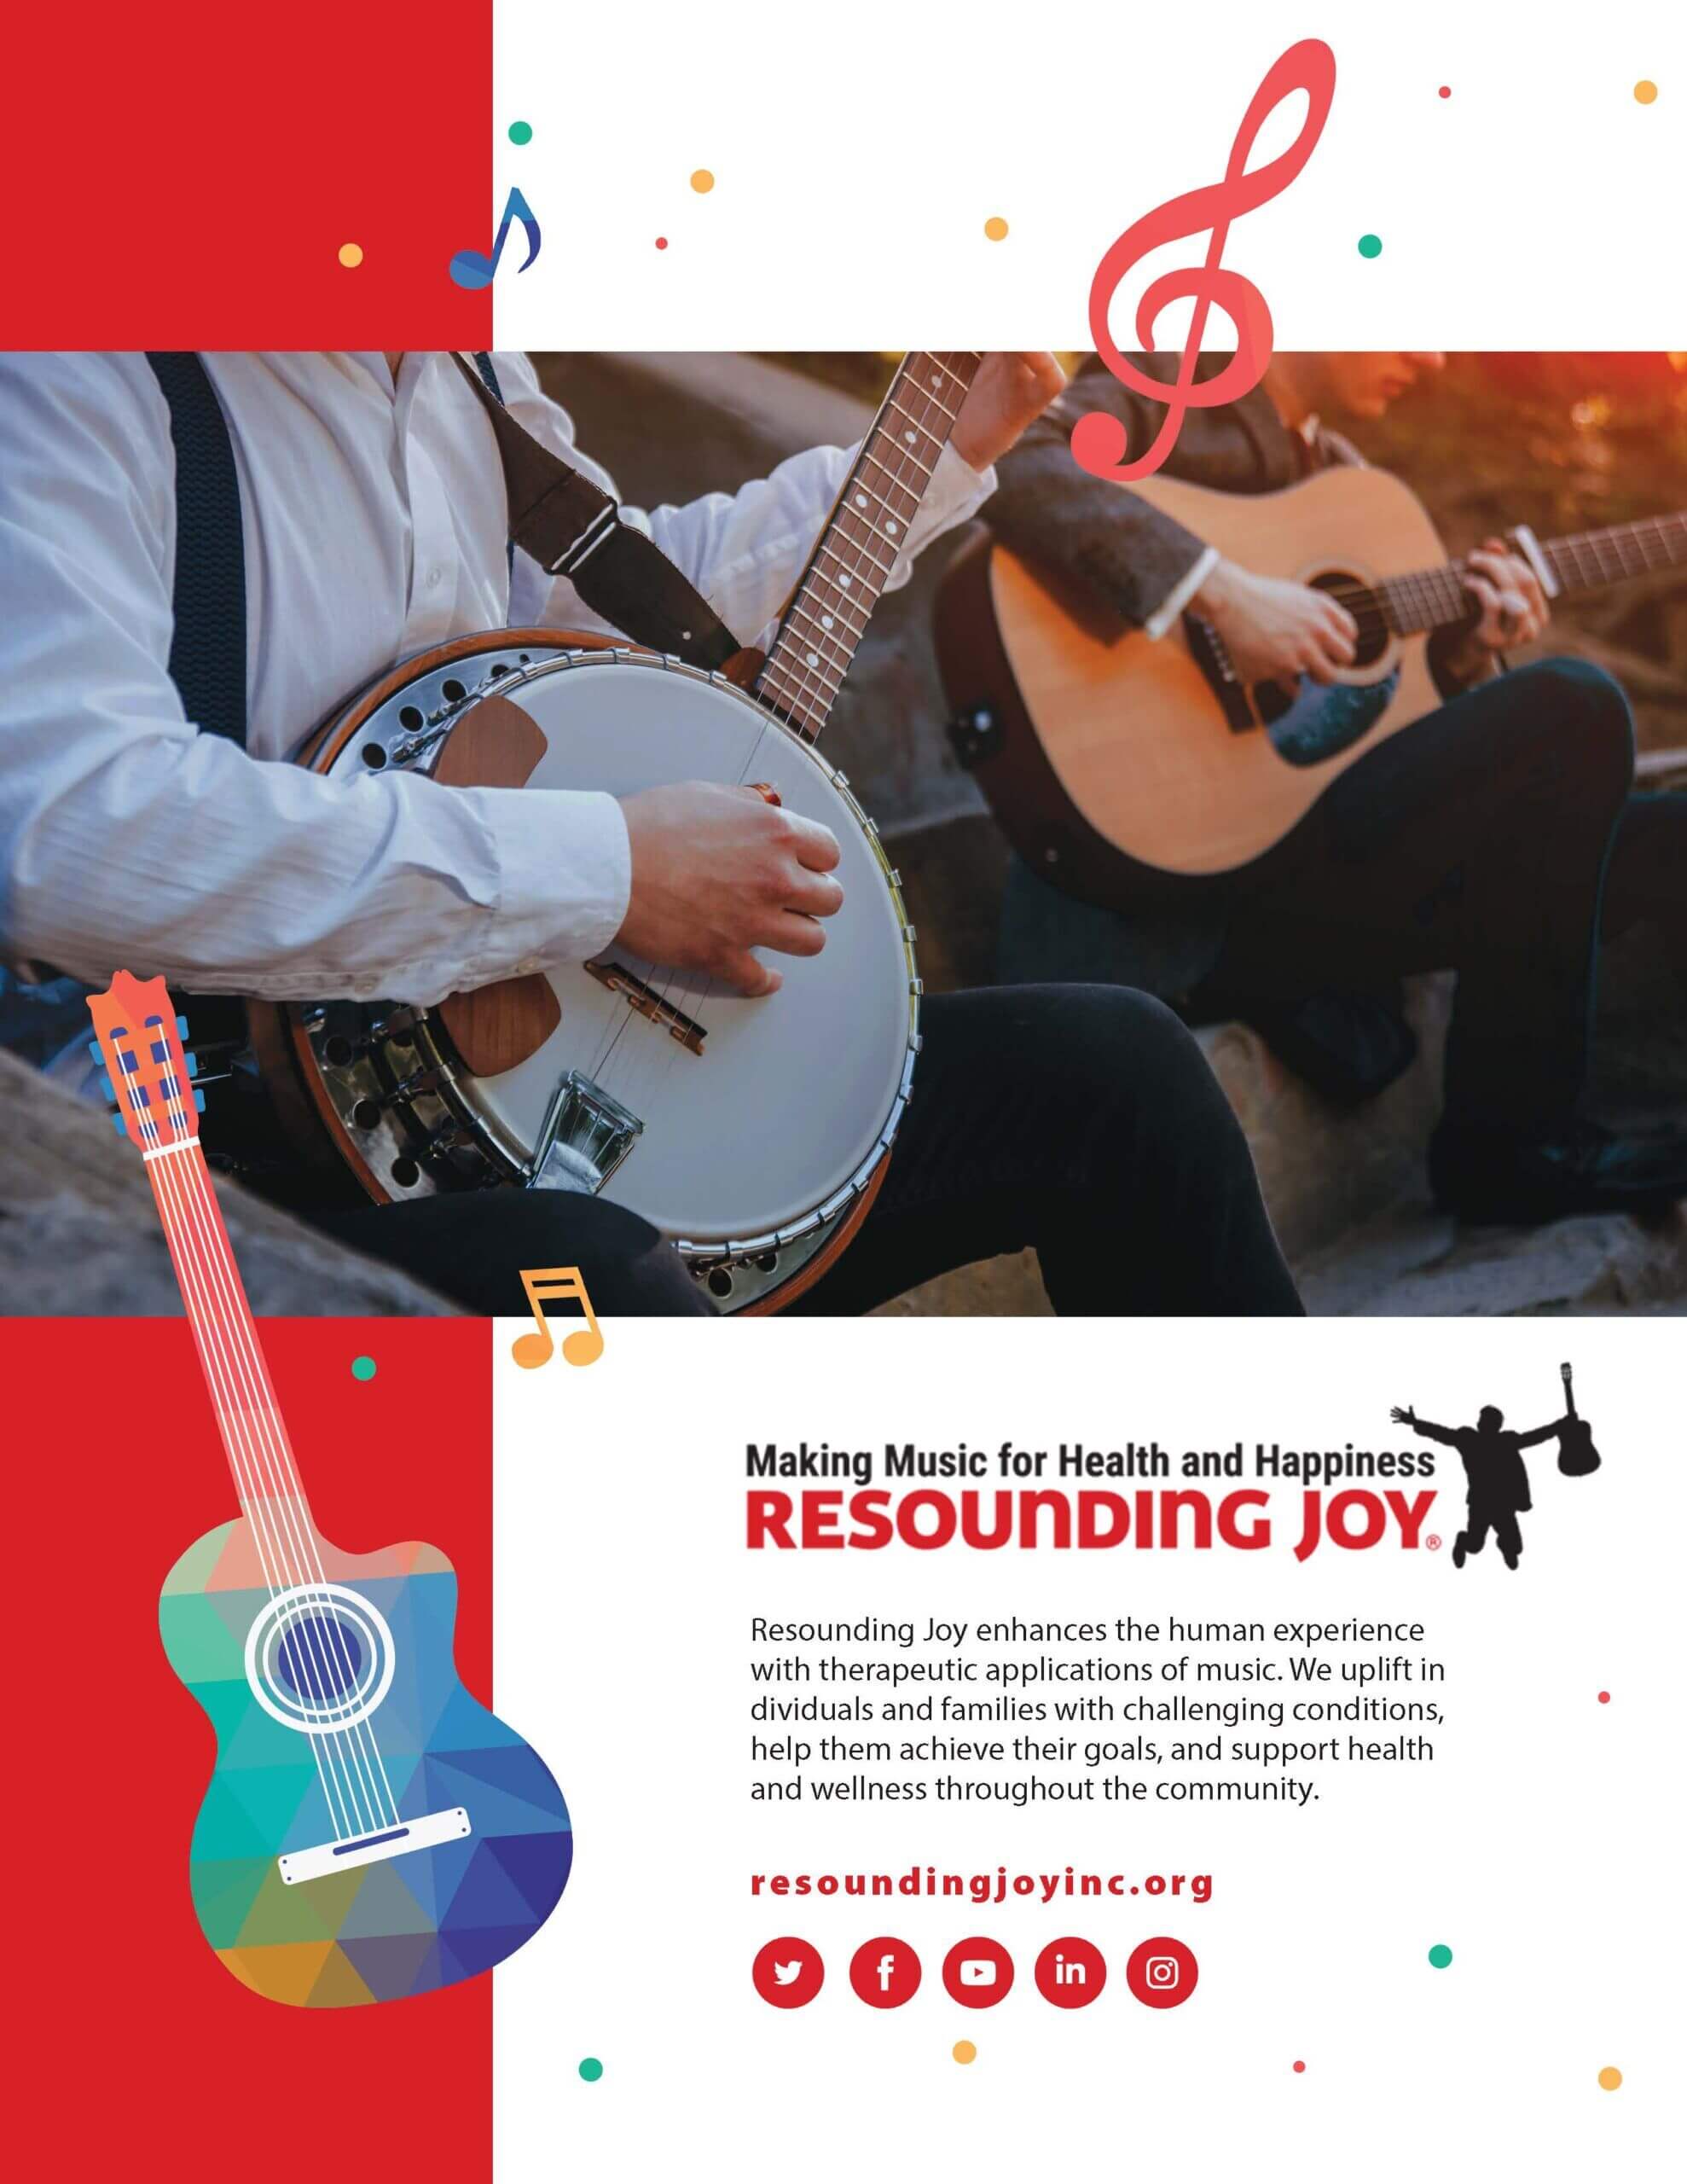 Resounding joy Media Kit designed by Puzzle Pieces Marketing